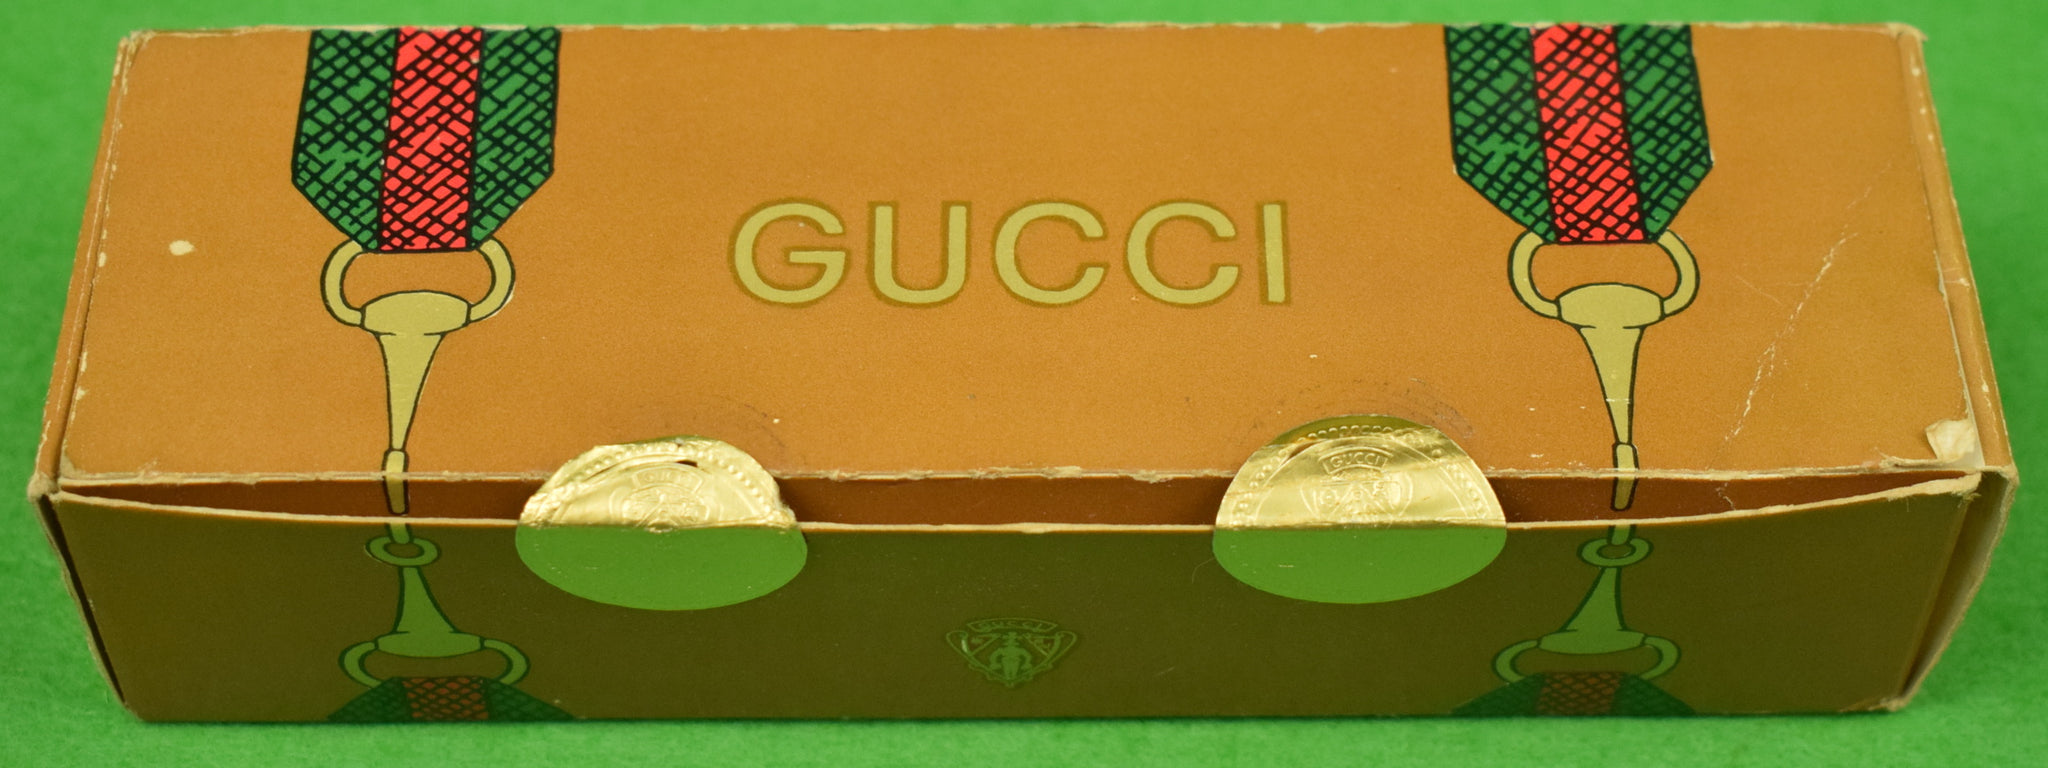 Boxed Set of 21 Gucci Matchbooks